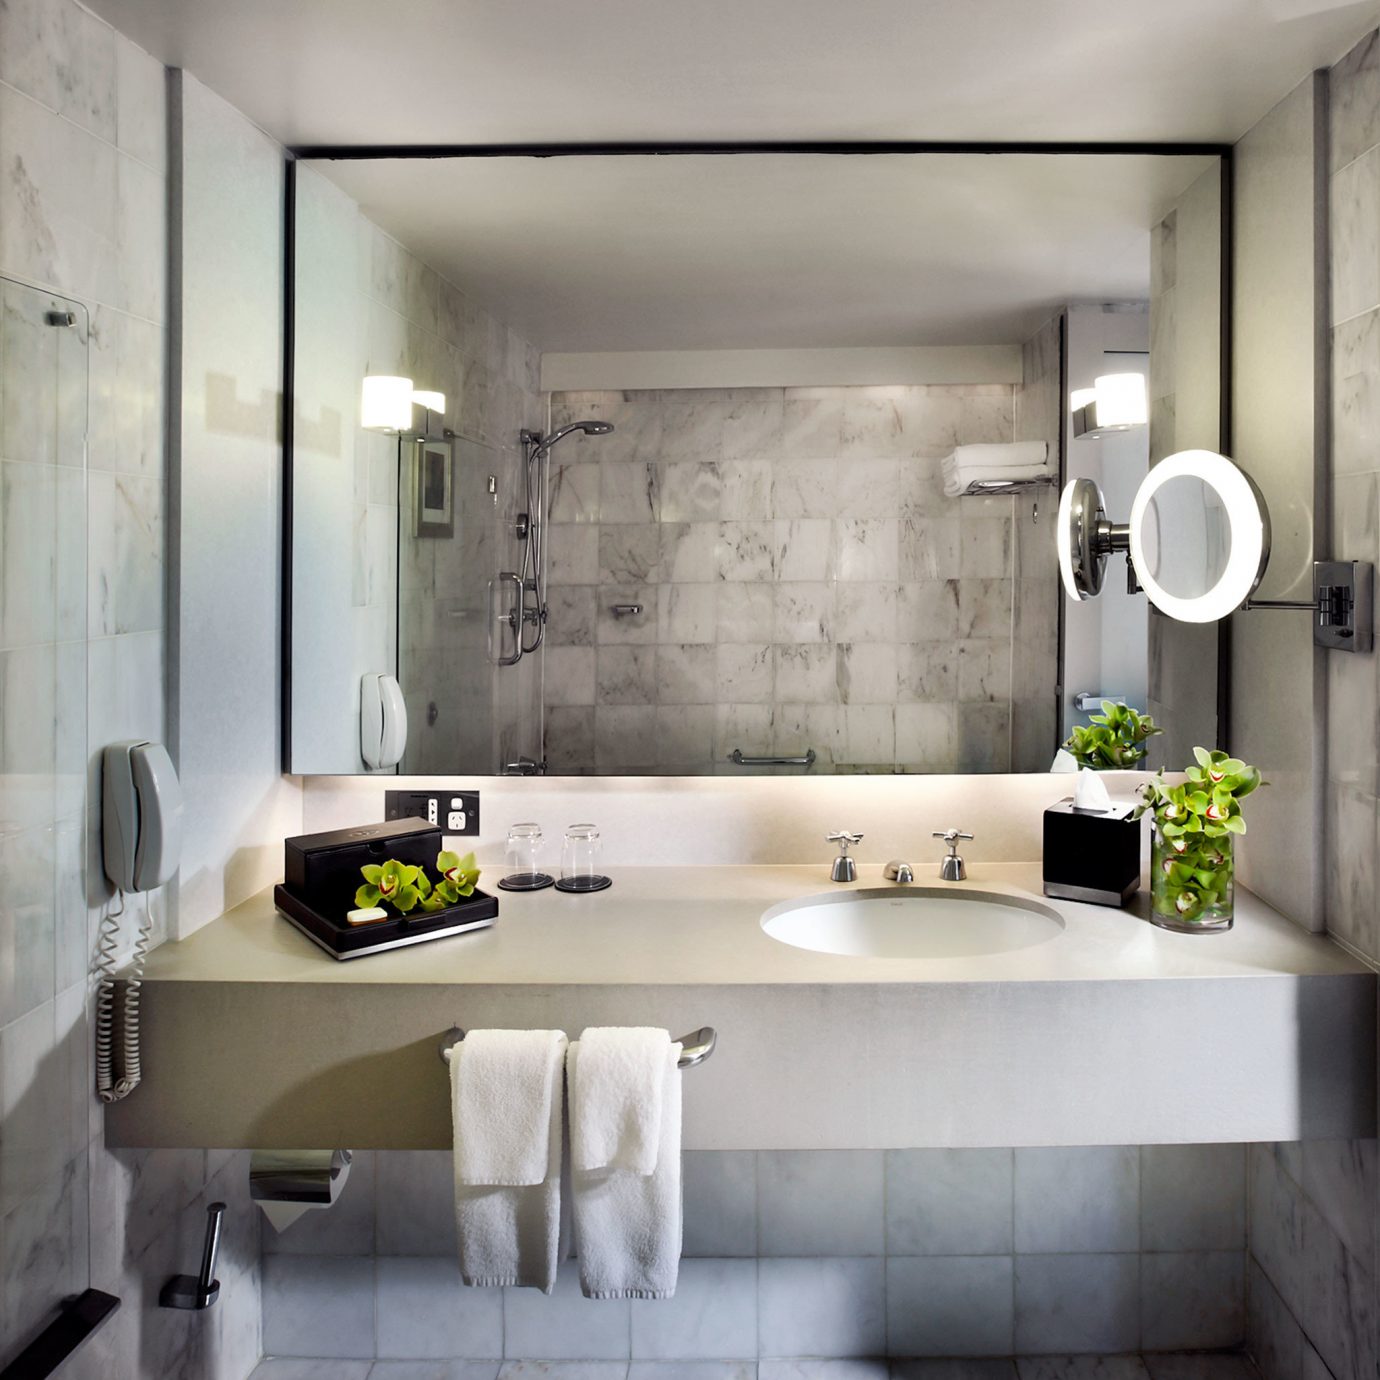 Bath Classic Resort bathroom property sink home plumbing fixture toilet bathtub tile flooring bidet tiled